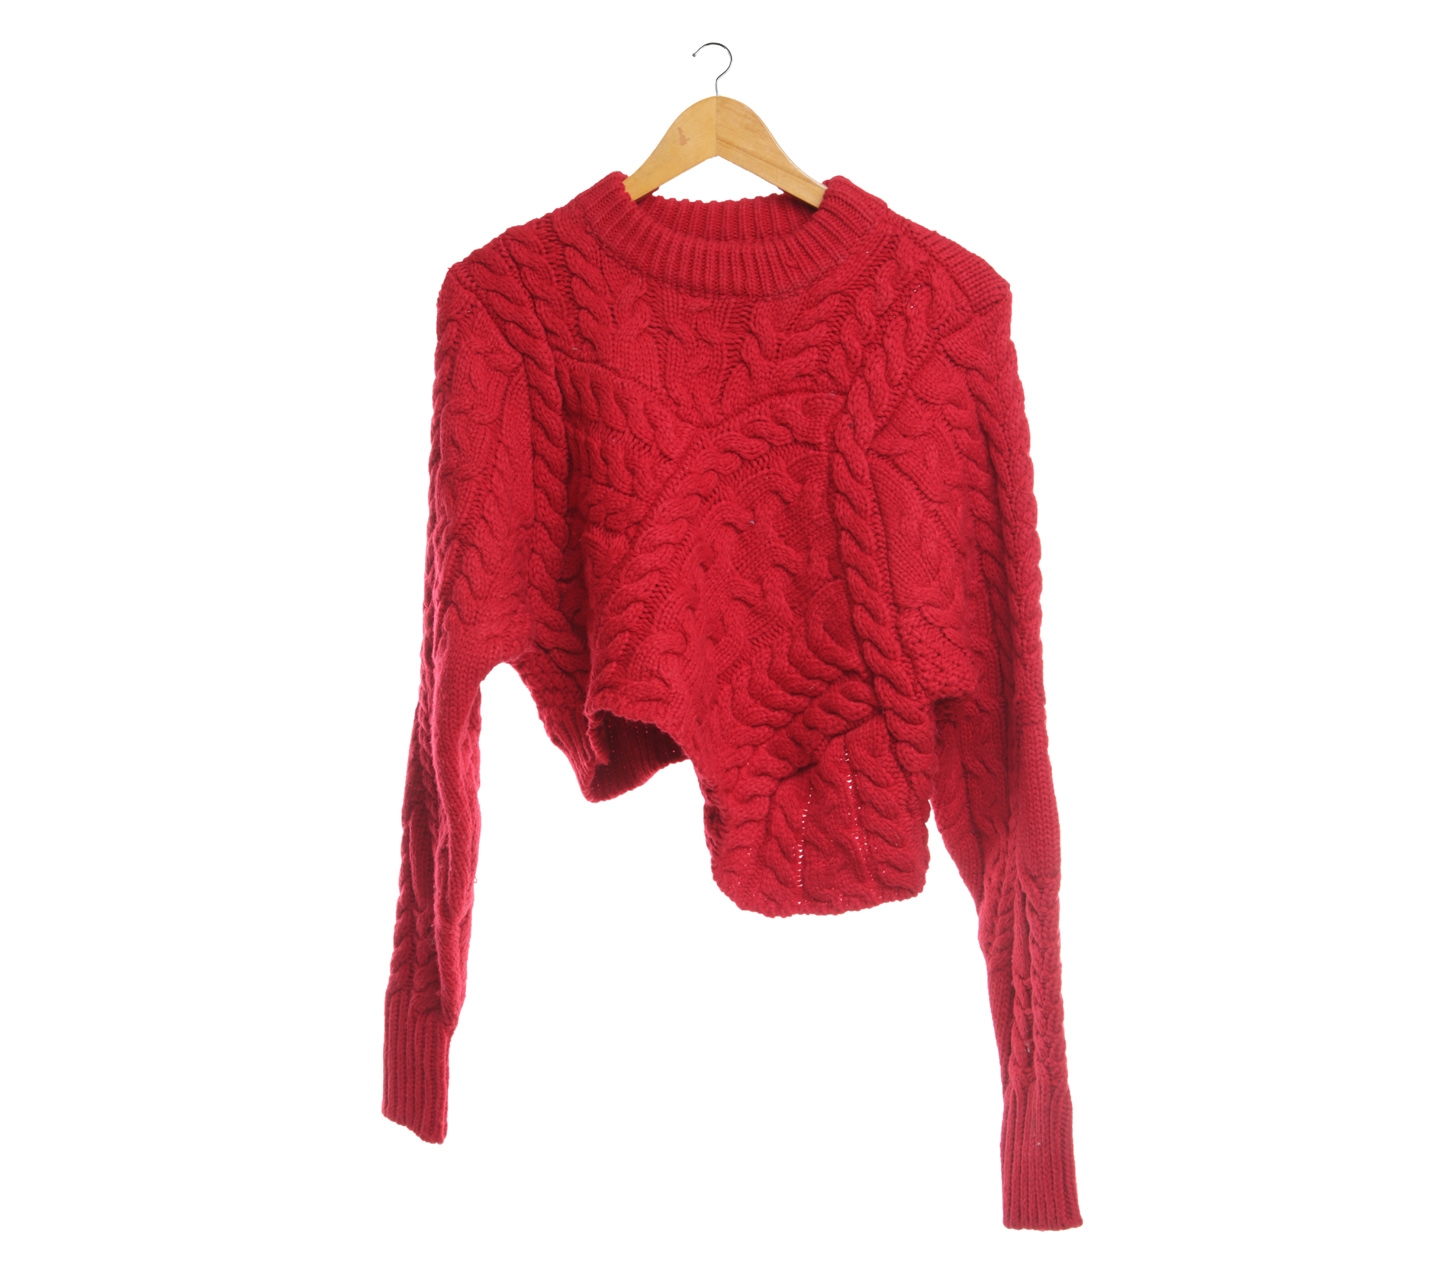 Kodz Red Knit Crop Sweater